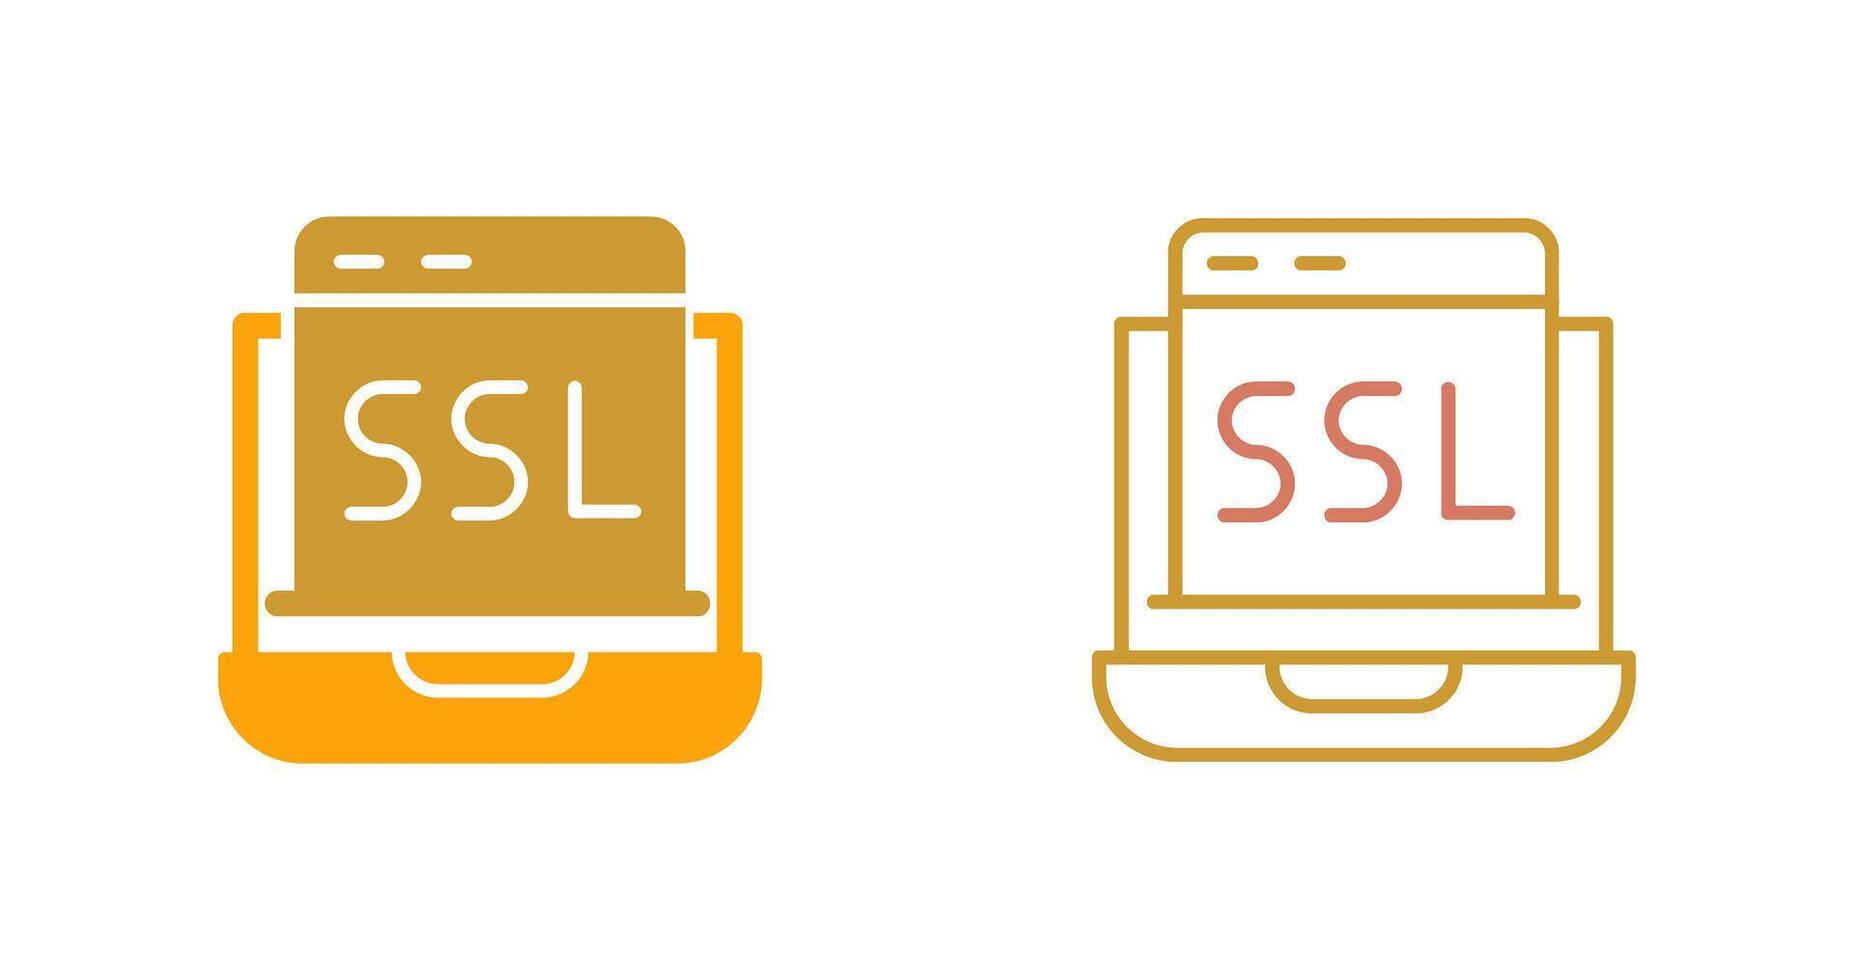 SSL Icon Design vector